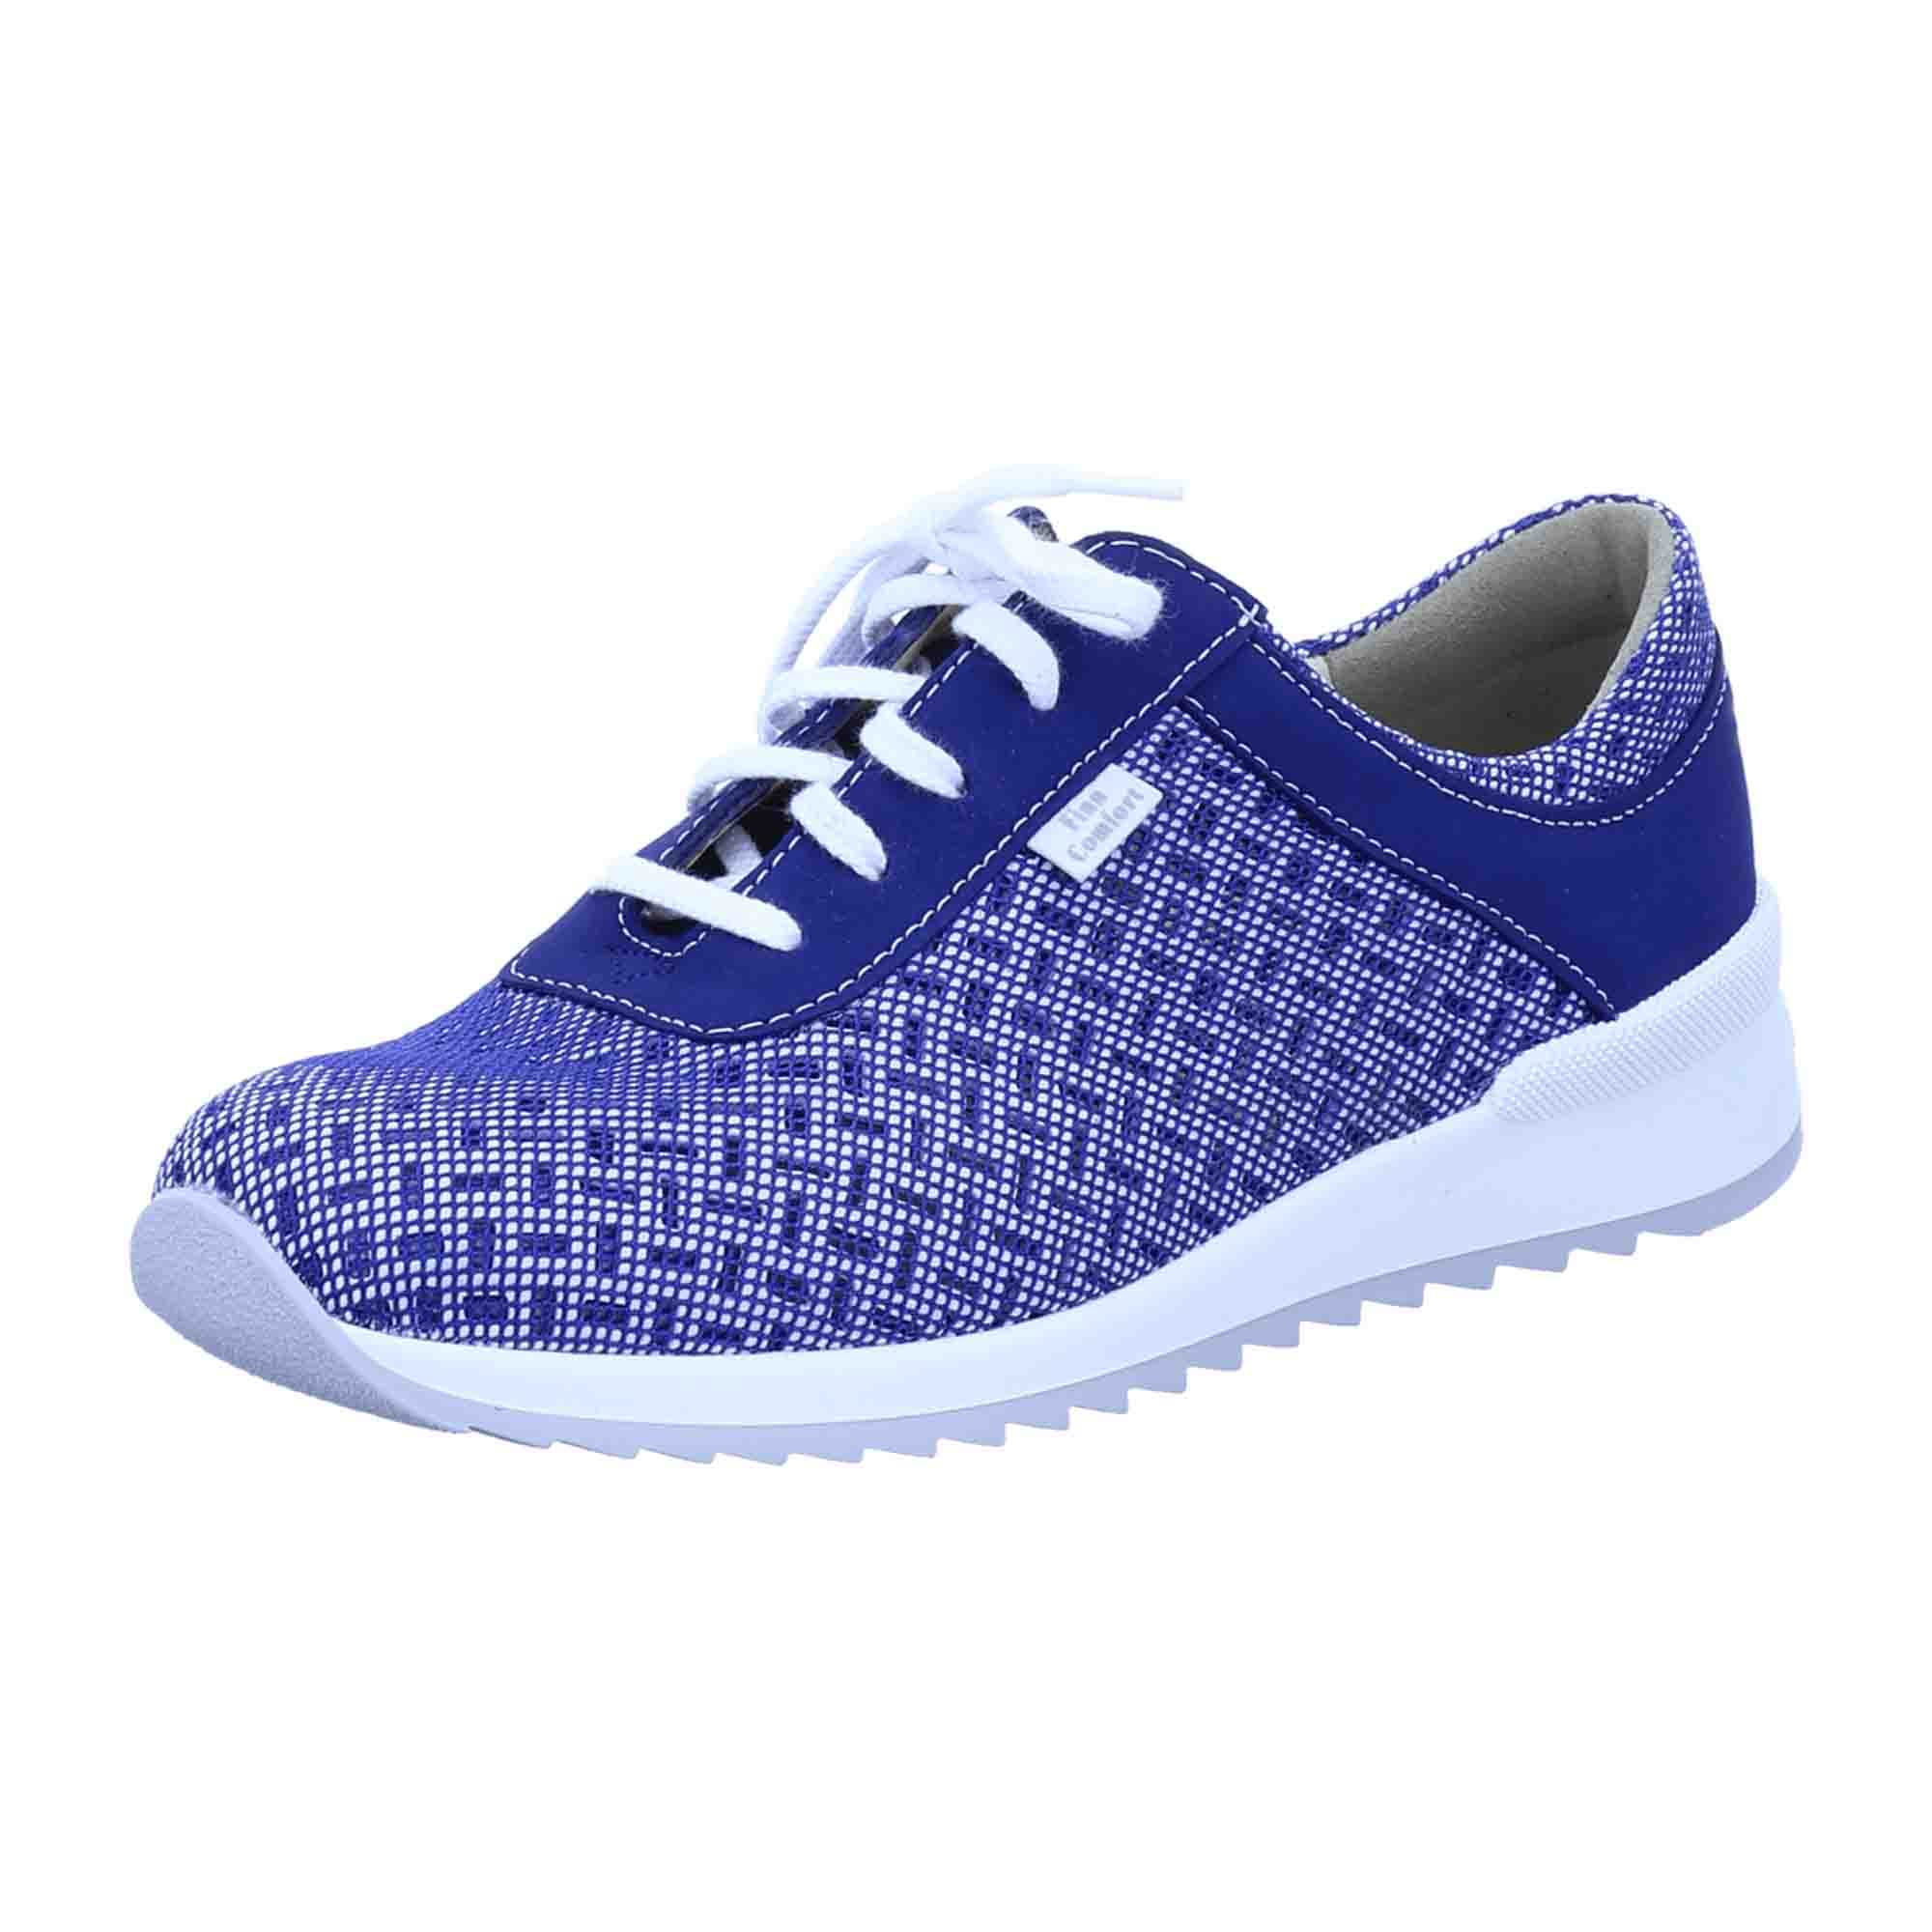 Finn Comfort Kobalt Blue Lace-Up Shoes - Comfortable, Removable Insole Women's Shoes, Blue Textile/Leather Mix